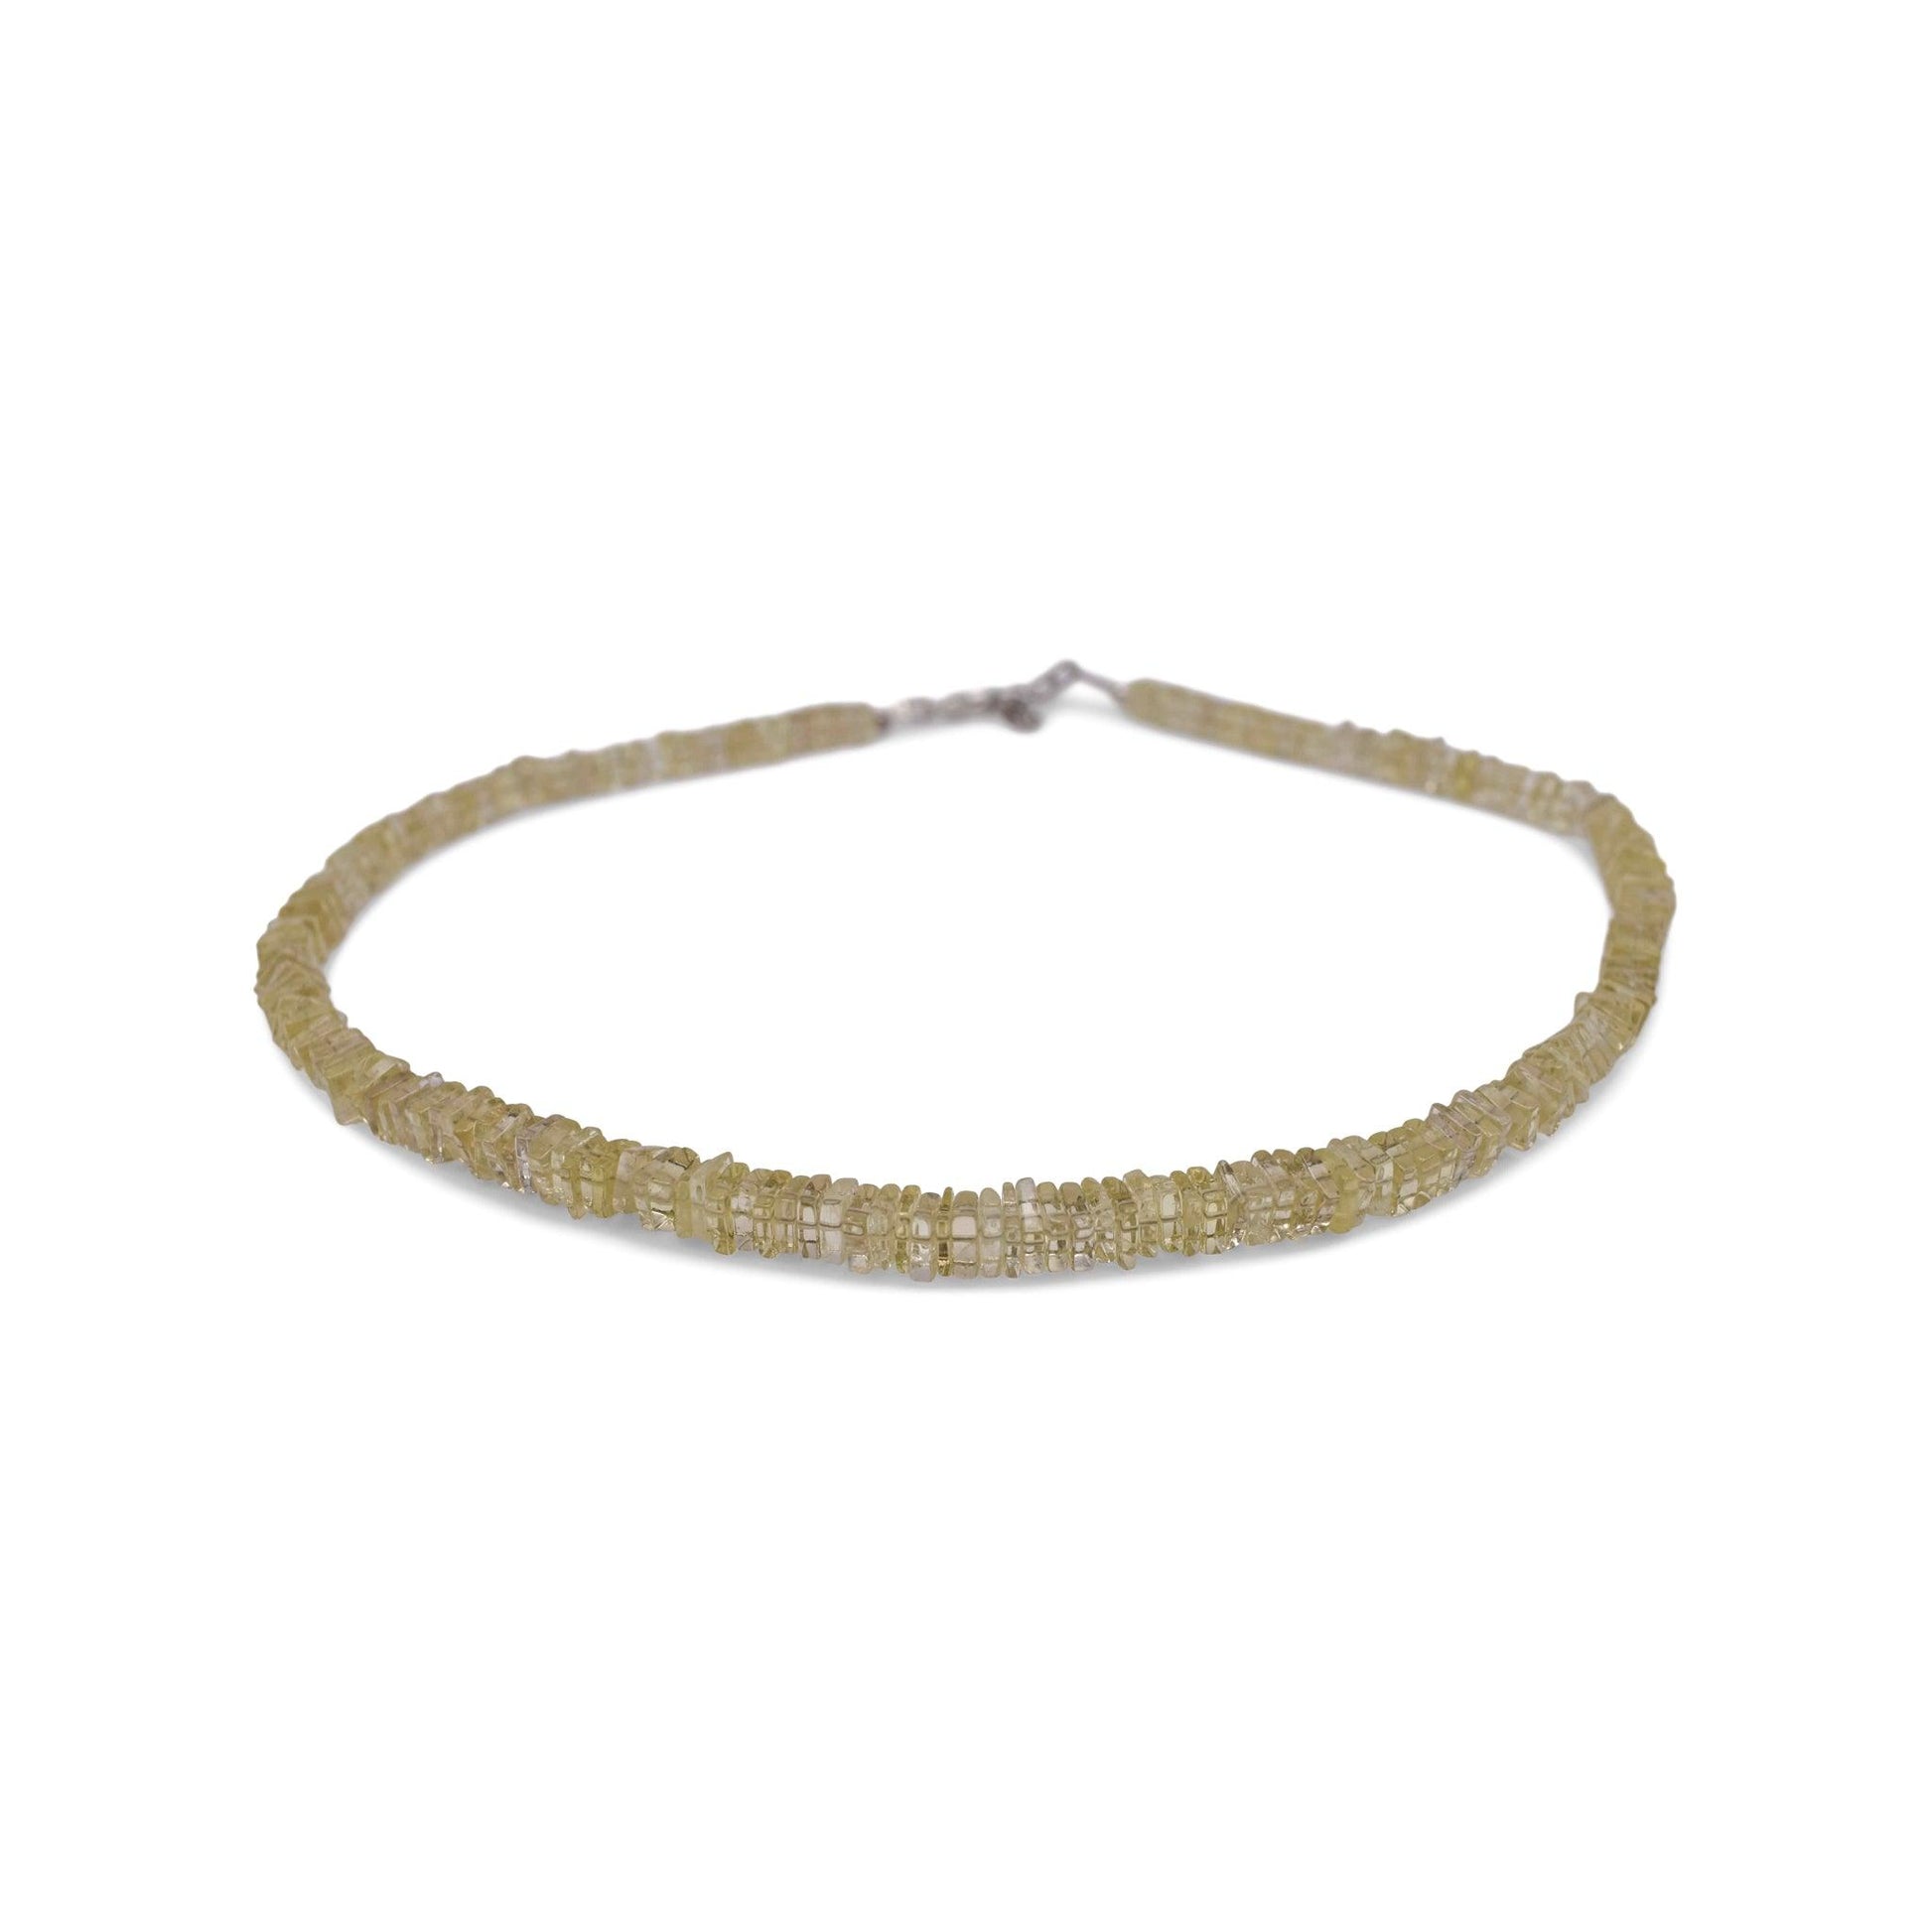 Lemon quartz heishi beads necklace front angle 